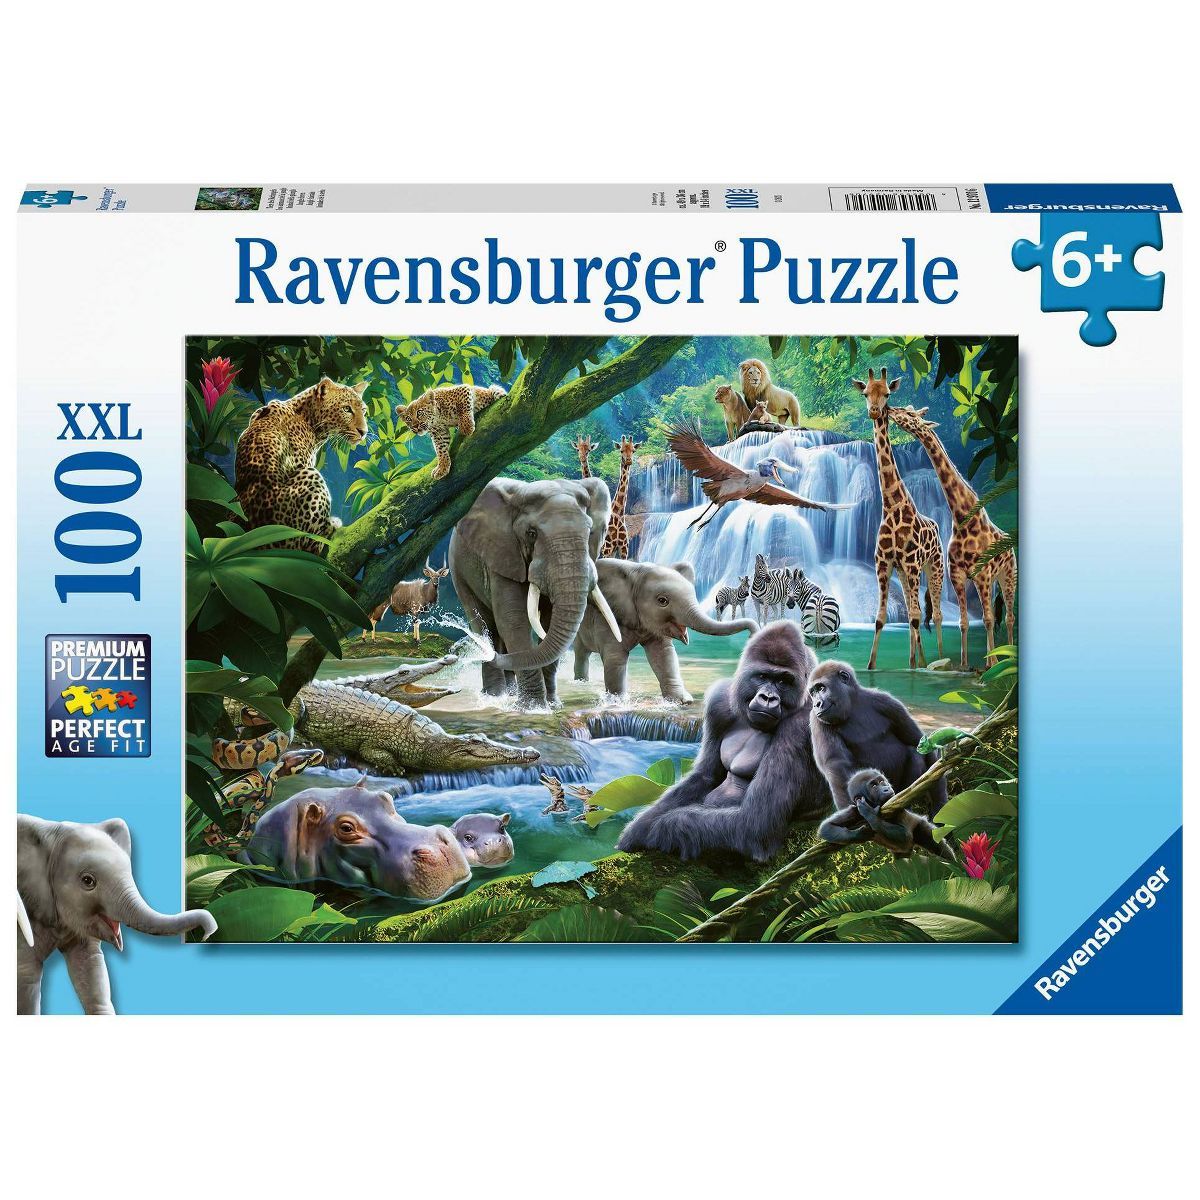 Ravensburger Jungle Animals XXL Jigsaw Puzzle - 100pc | Target